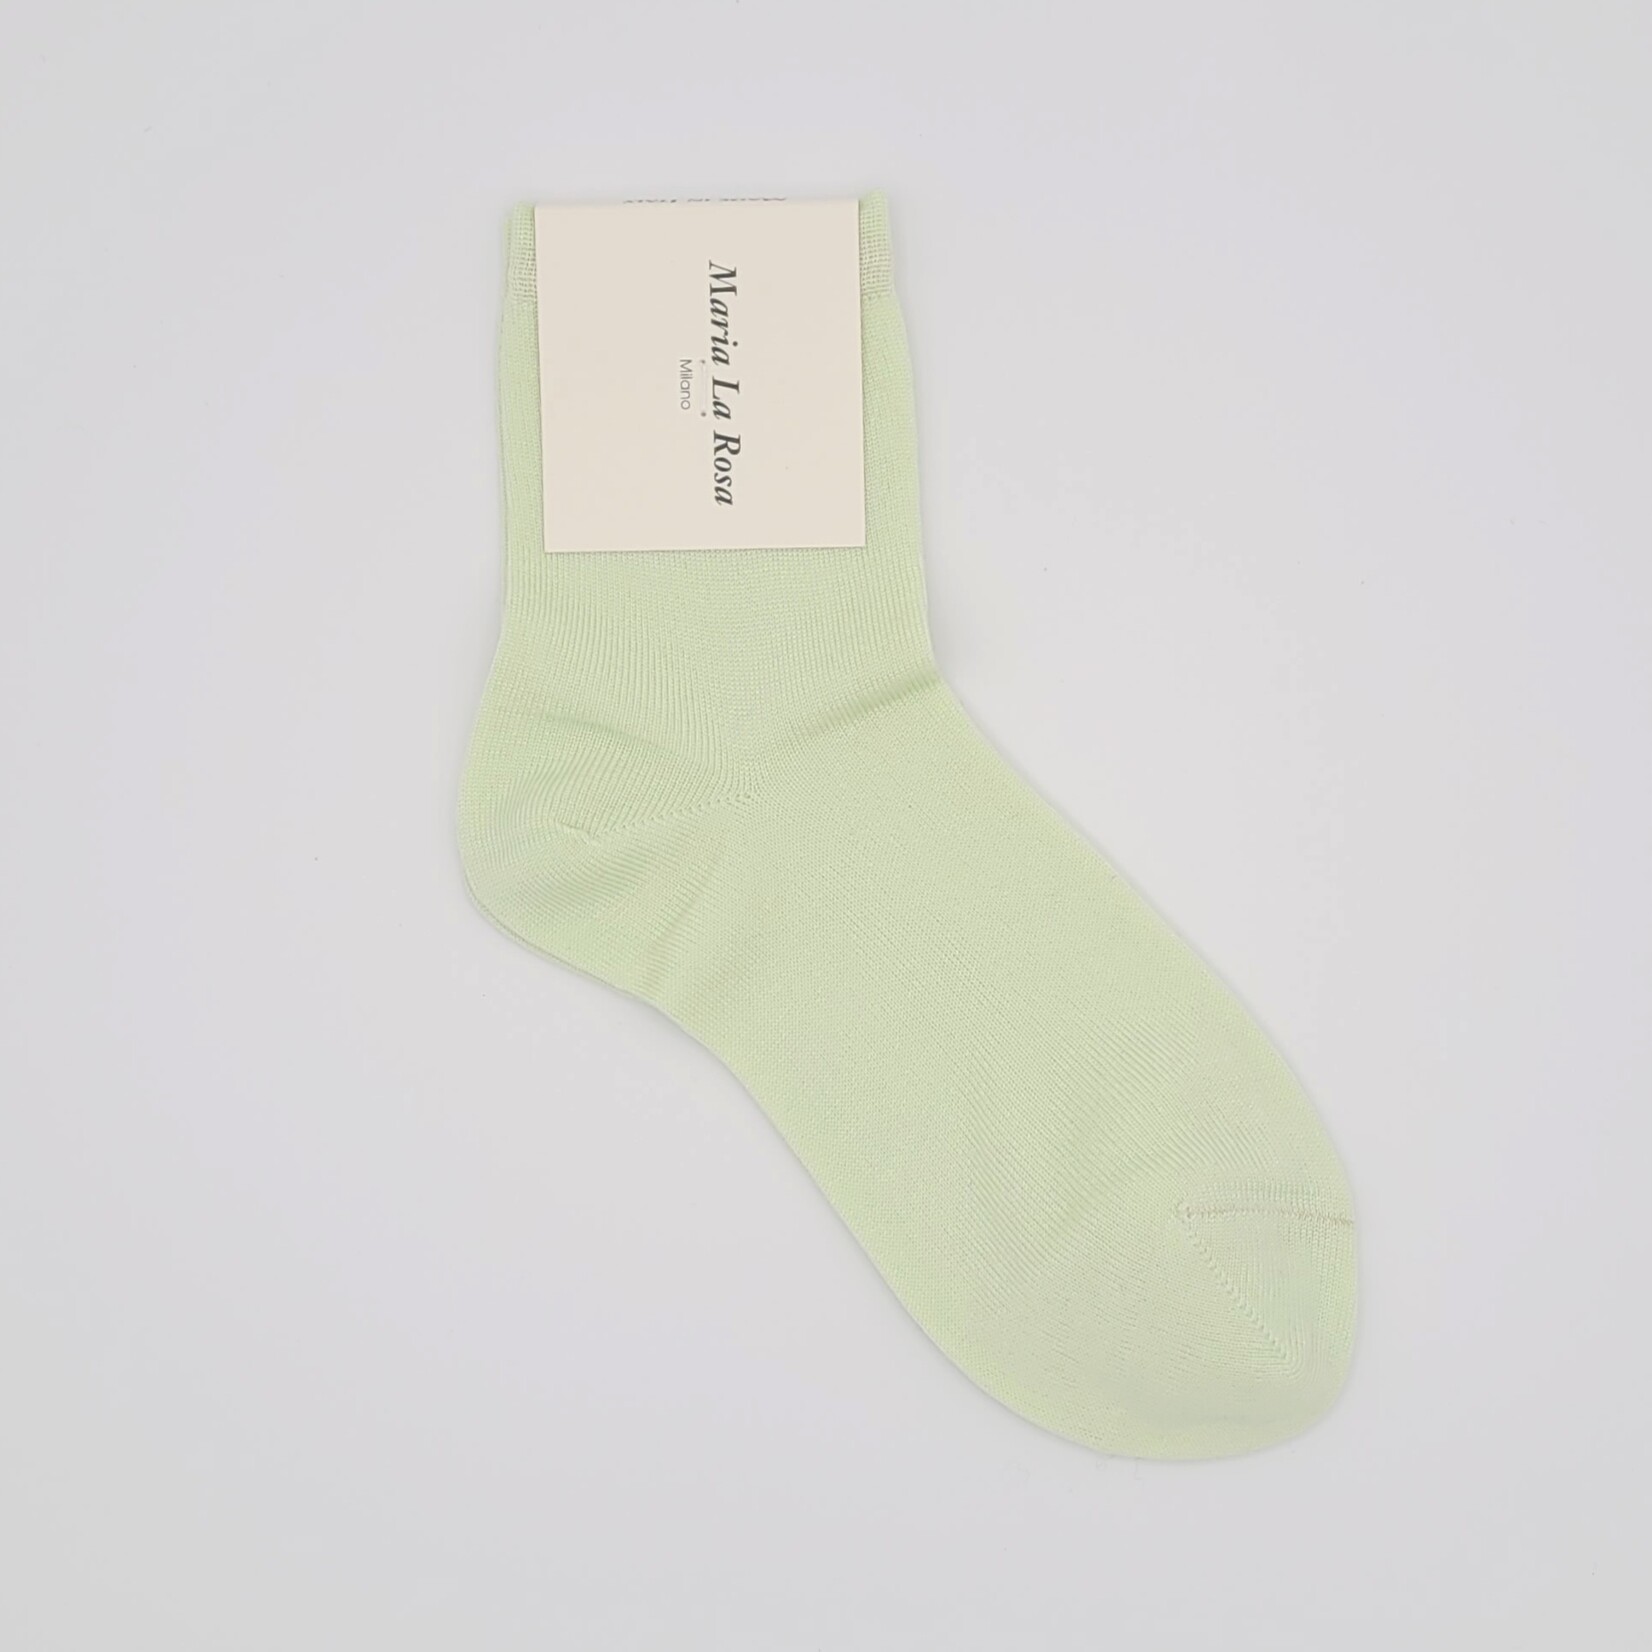 Maria La Rosa Maria La Rosa: One - Silk Ankle Socks